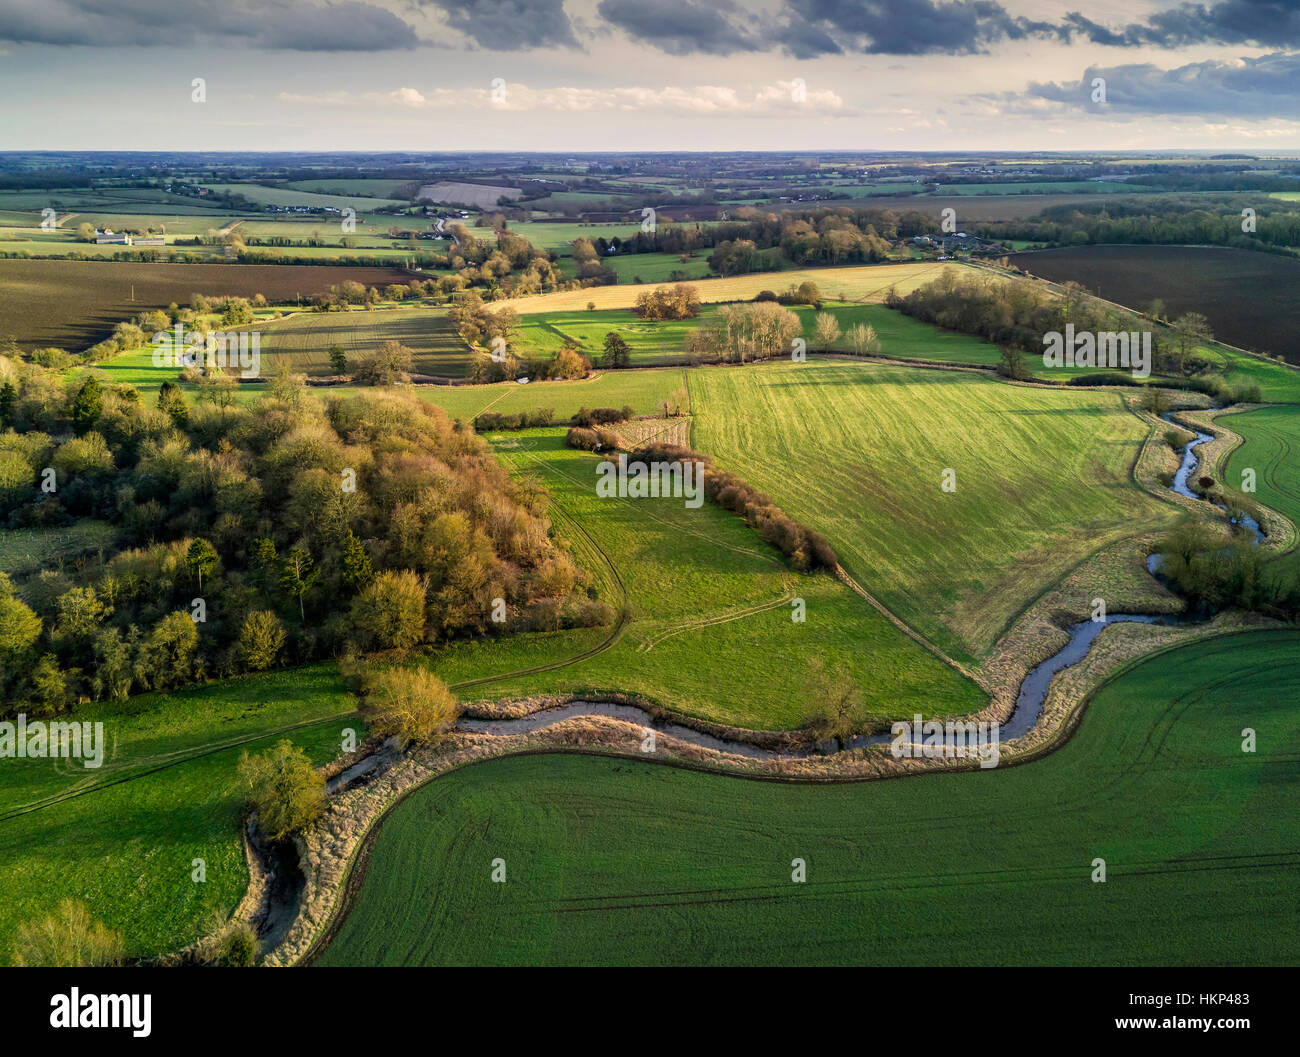 North Essex Rural aerial landscape Stock Photo